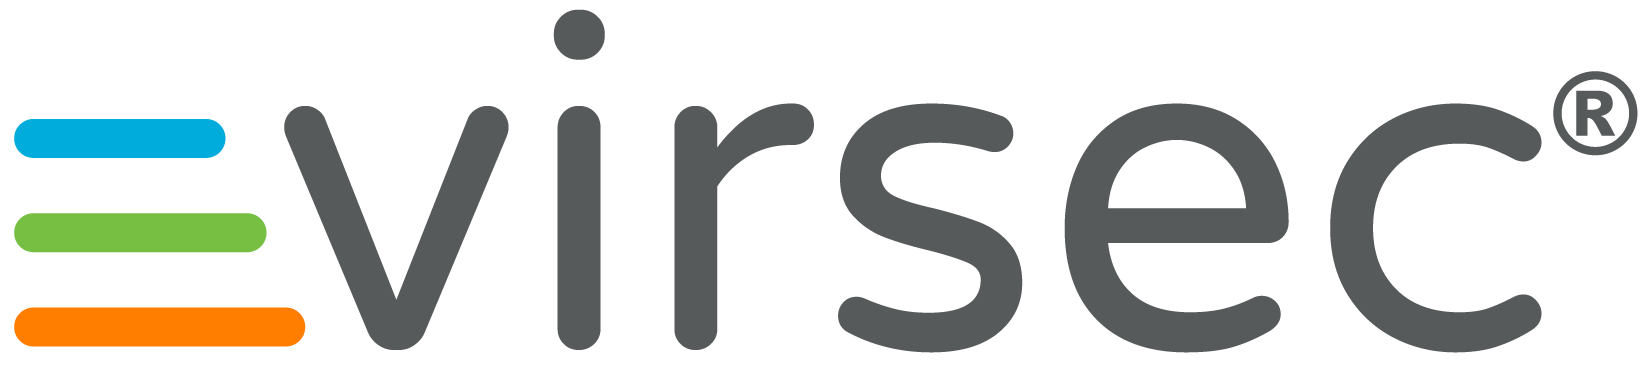 Virsec_logo_RGB-1650 (002) for Web August 2020.png